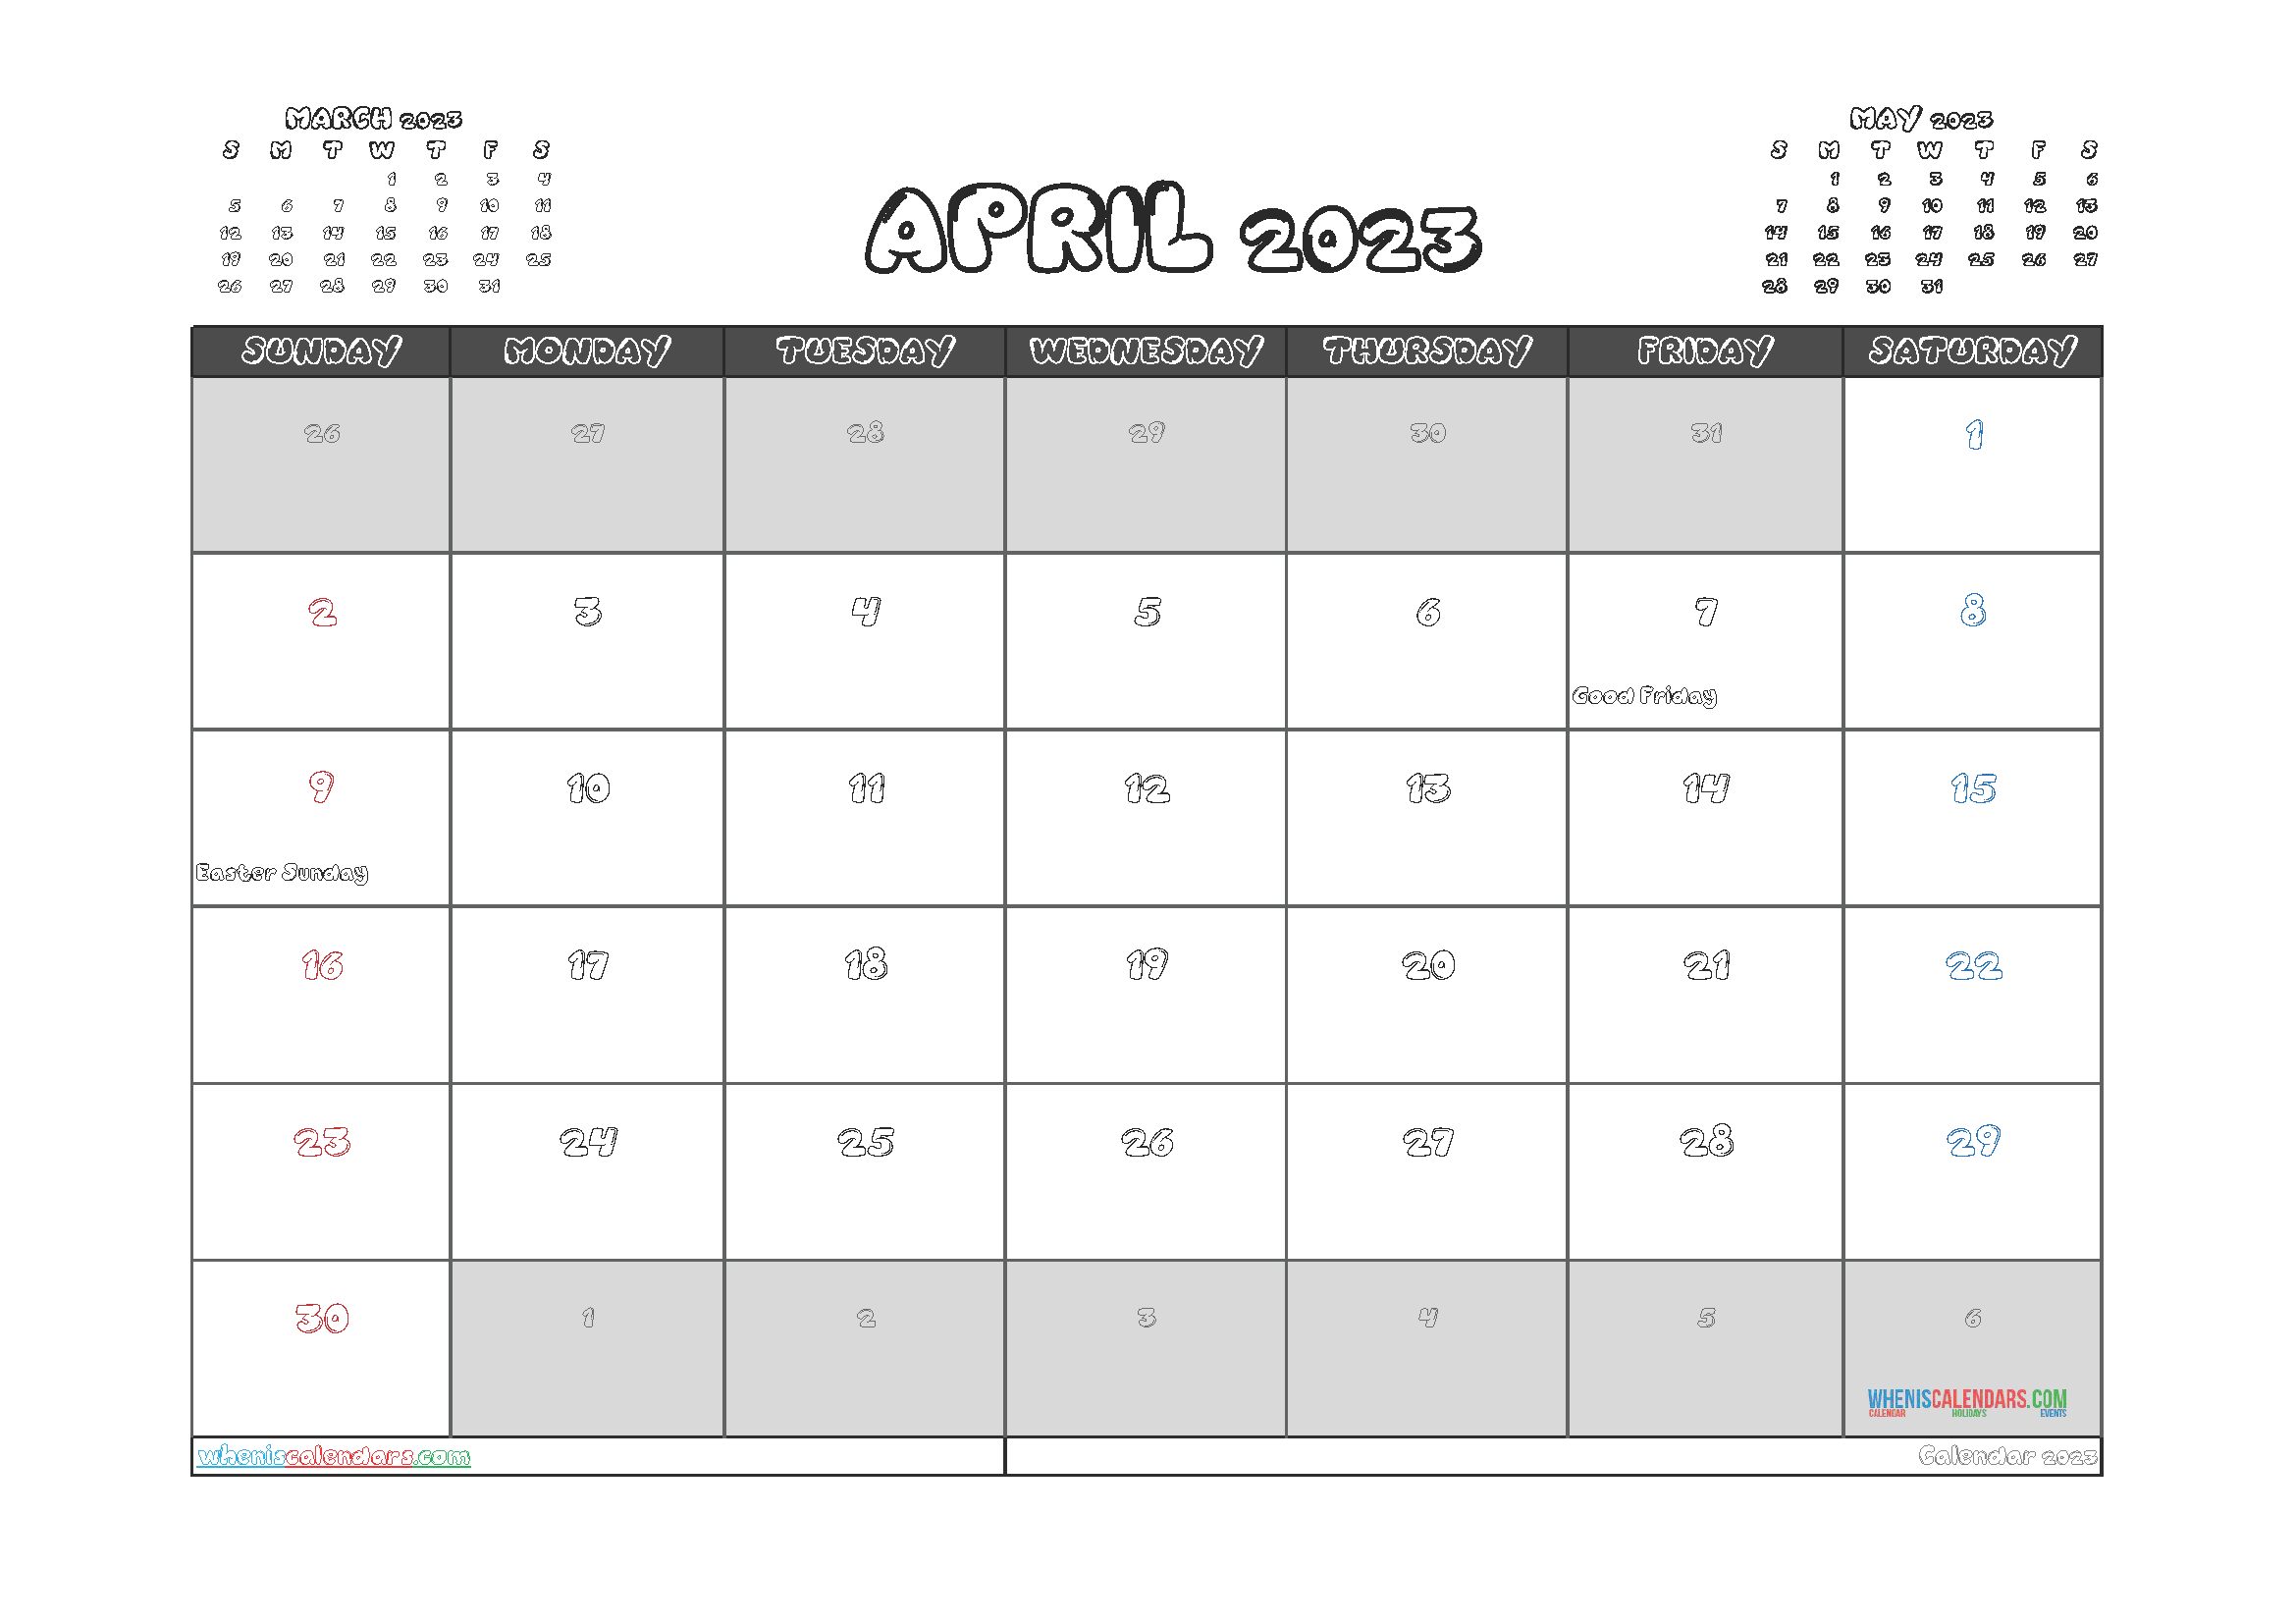 Free April 2023 Calendar with Holidays